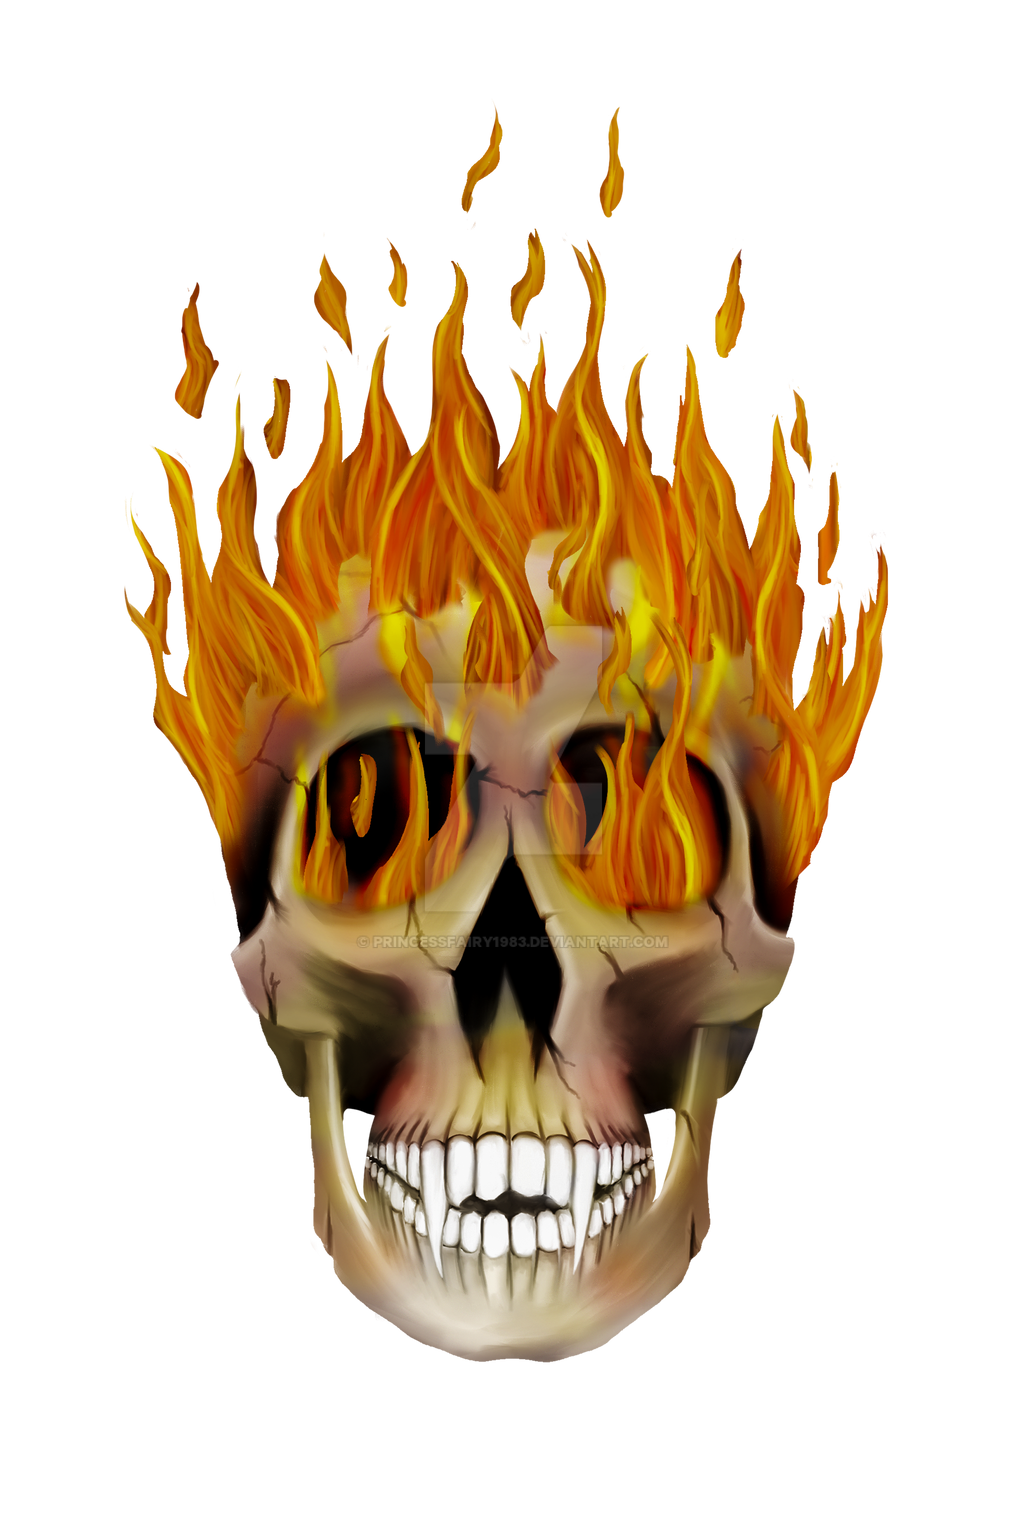 Flaming Skull by PrincessFairy1983 on DeviantArt